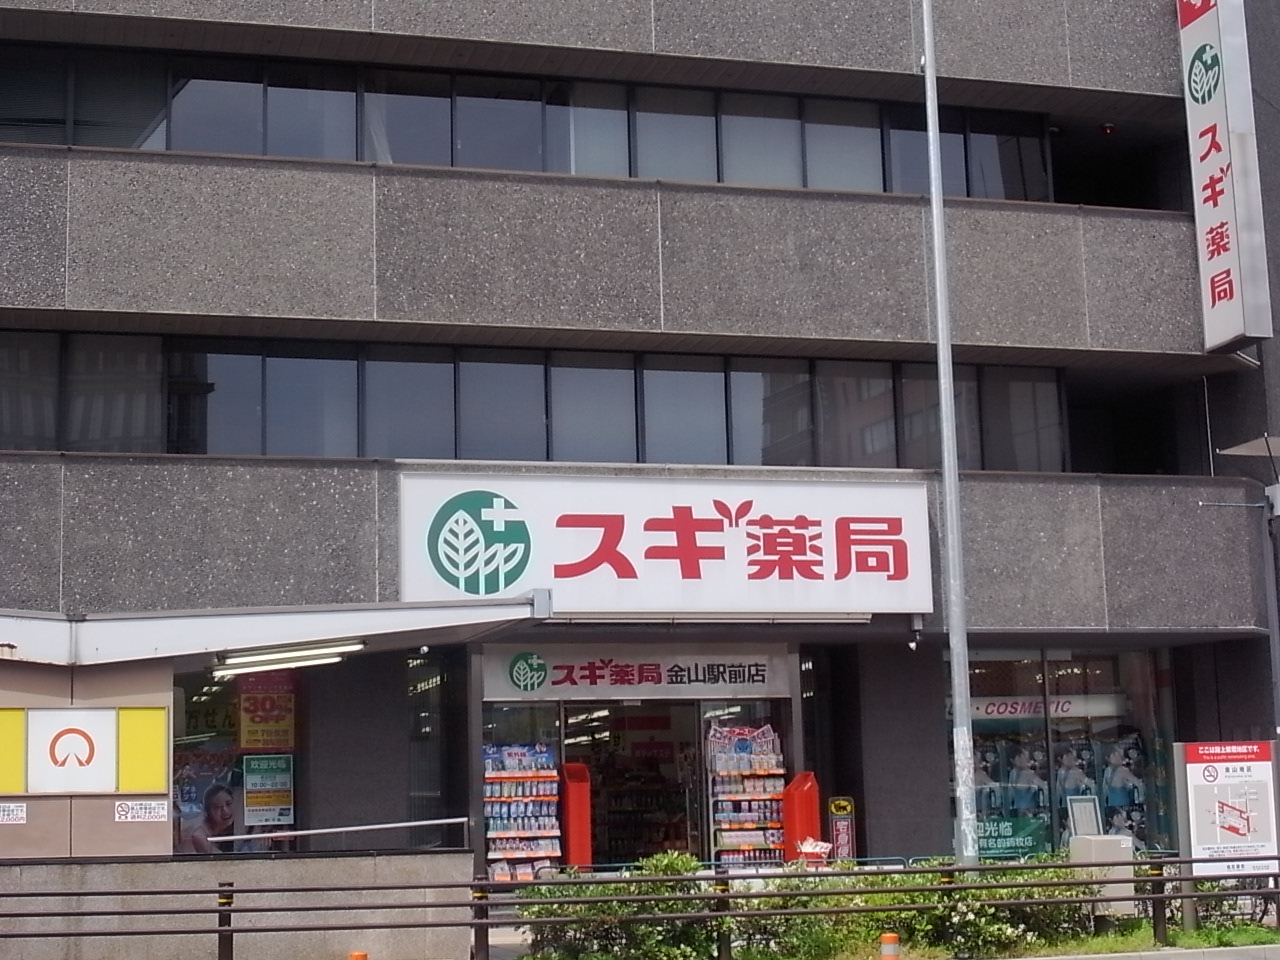 Dorakkusutoa. Cedar pharmacy Kanayama Station shop (drugstore) to 400m